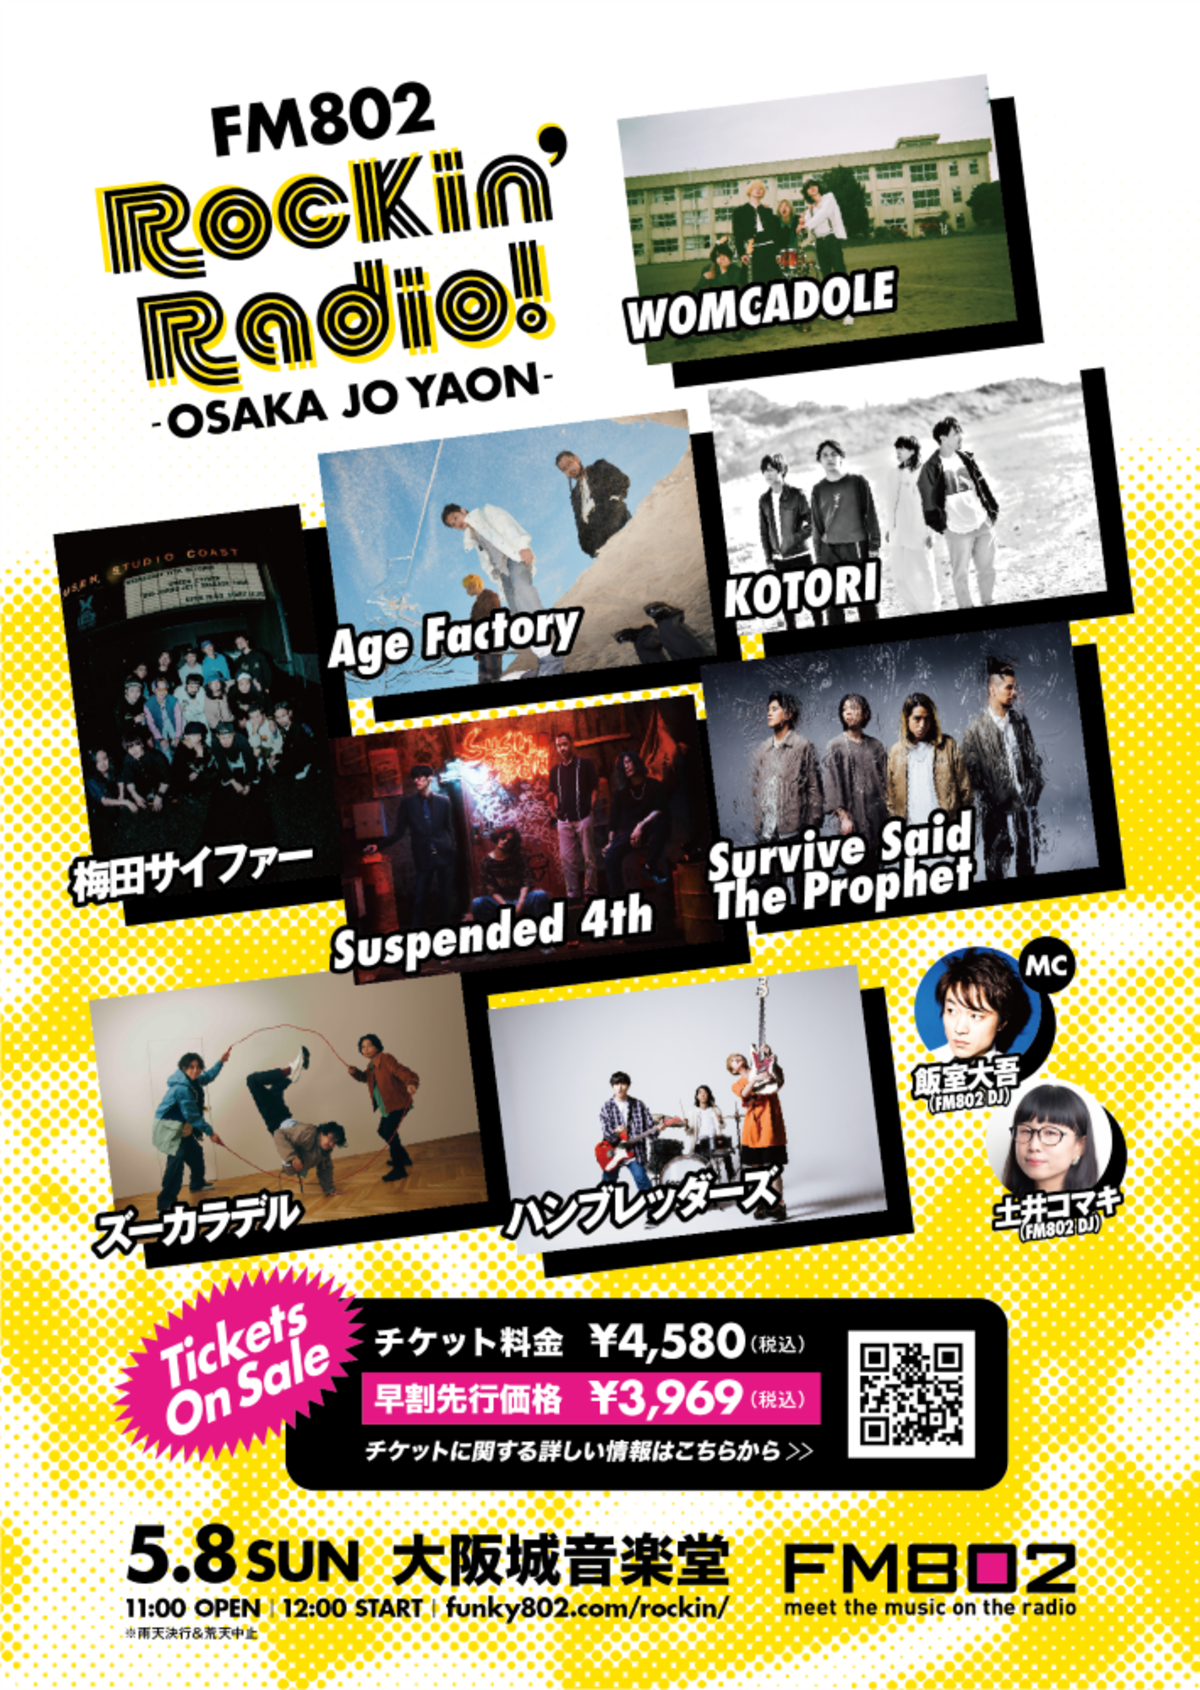 Fm802 Rockin Radio Osaka Jo Yaon 5 8開催決定 Womcadole ハンブレッダーズ Suspended 4th Age Factory ズーカラデルら出演